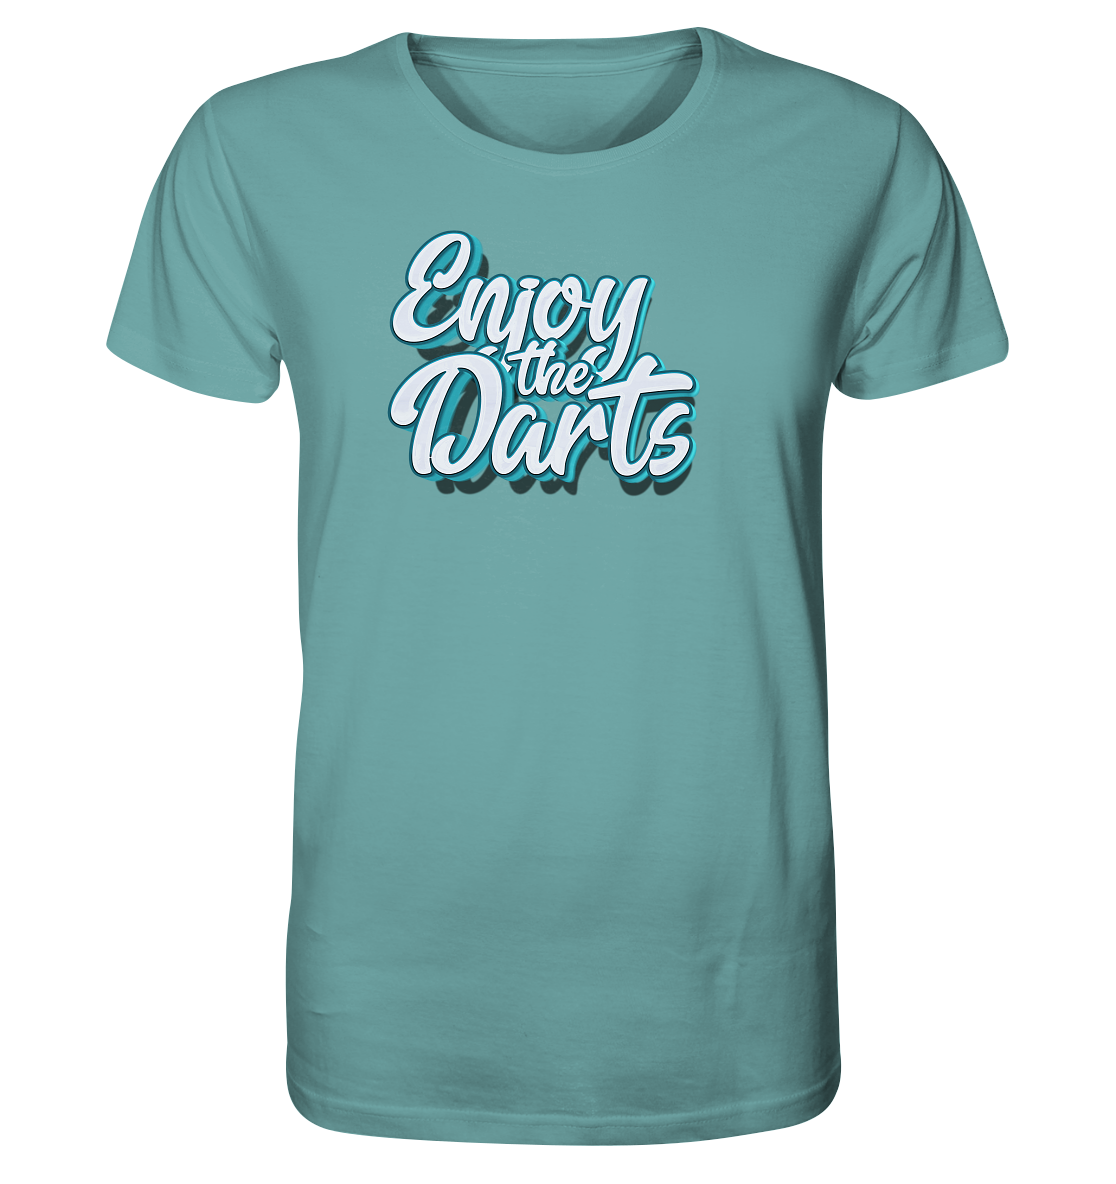 Enjoy the Darts - T-Shirt